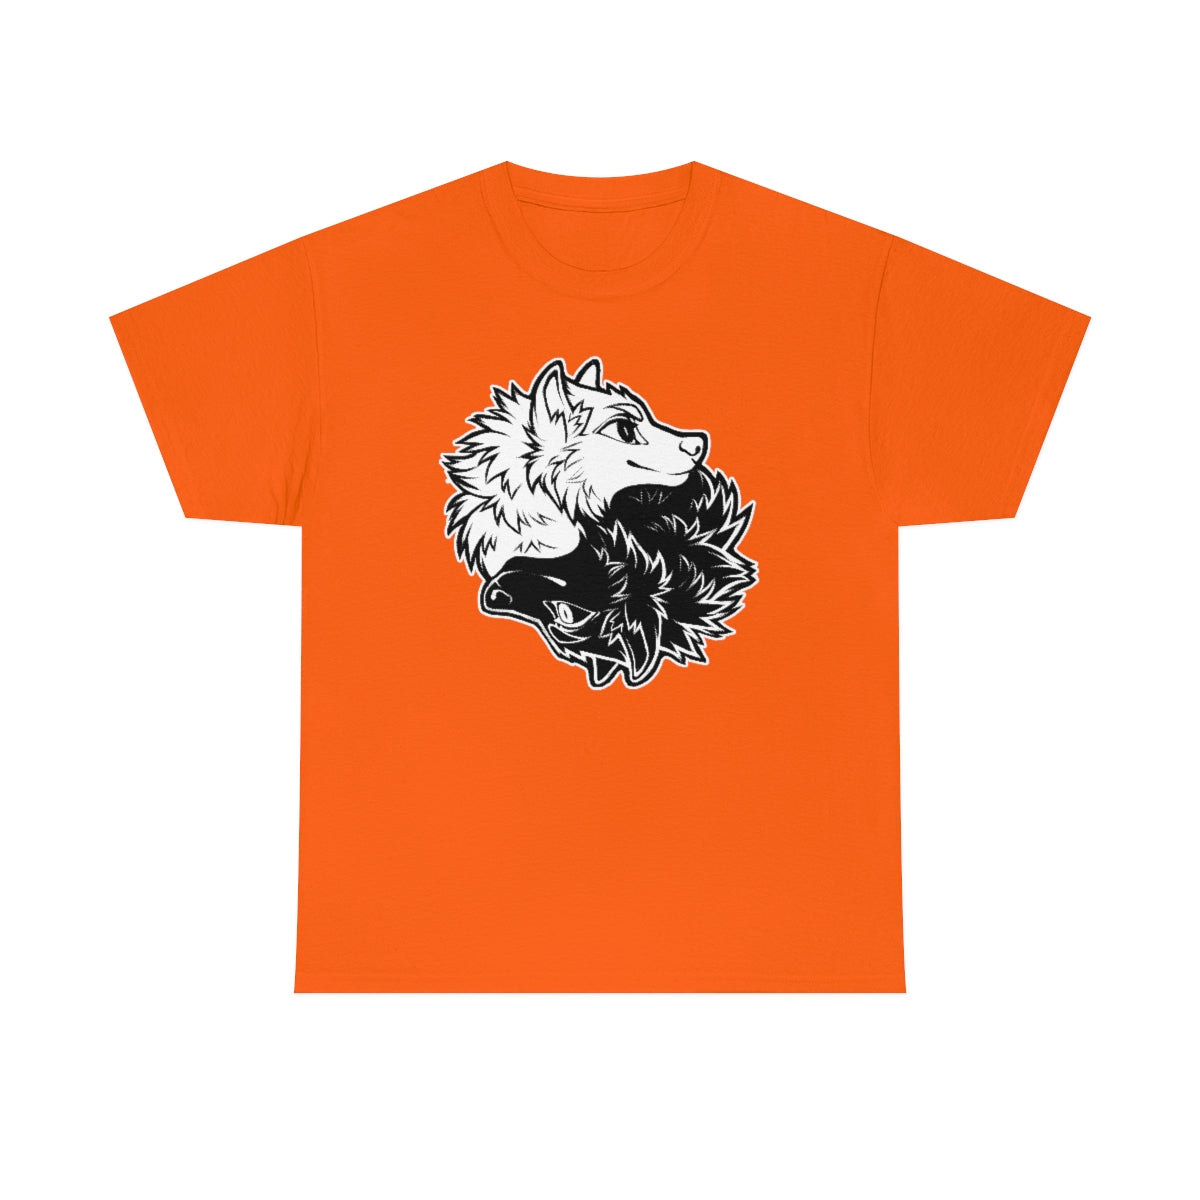 Ying Yang Wolves - T-Shirt T-Shirt Artworktee Orange S 